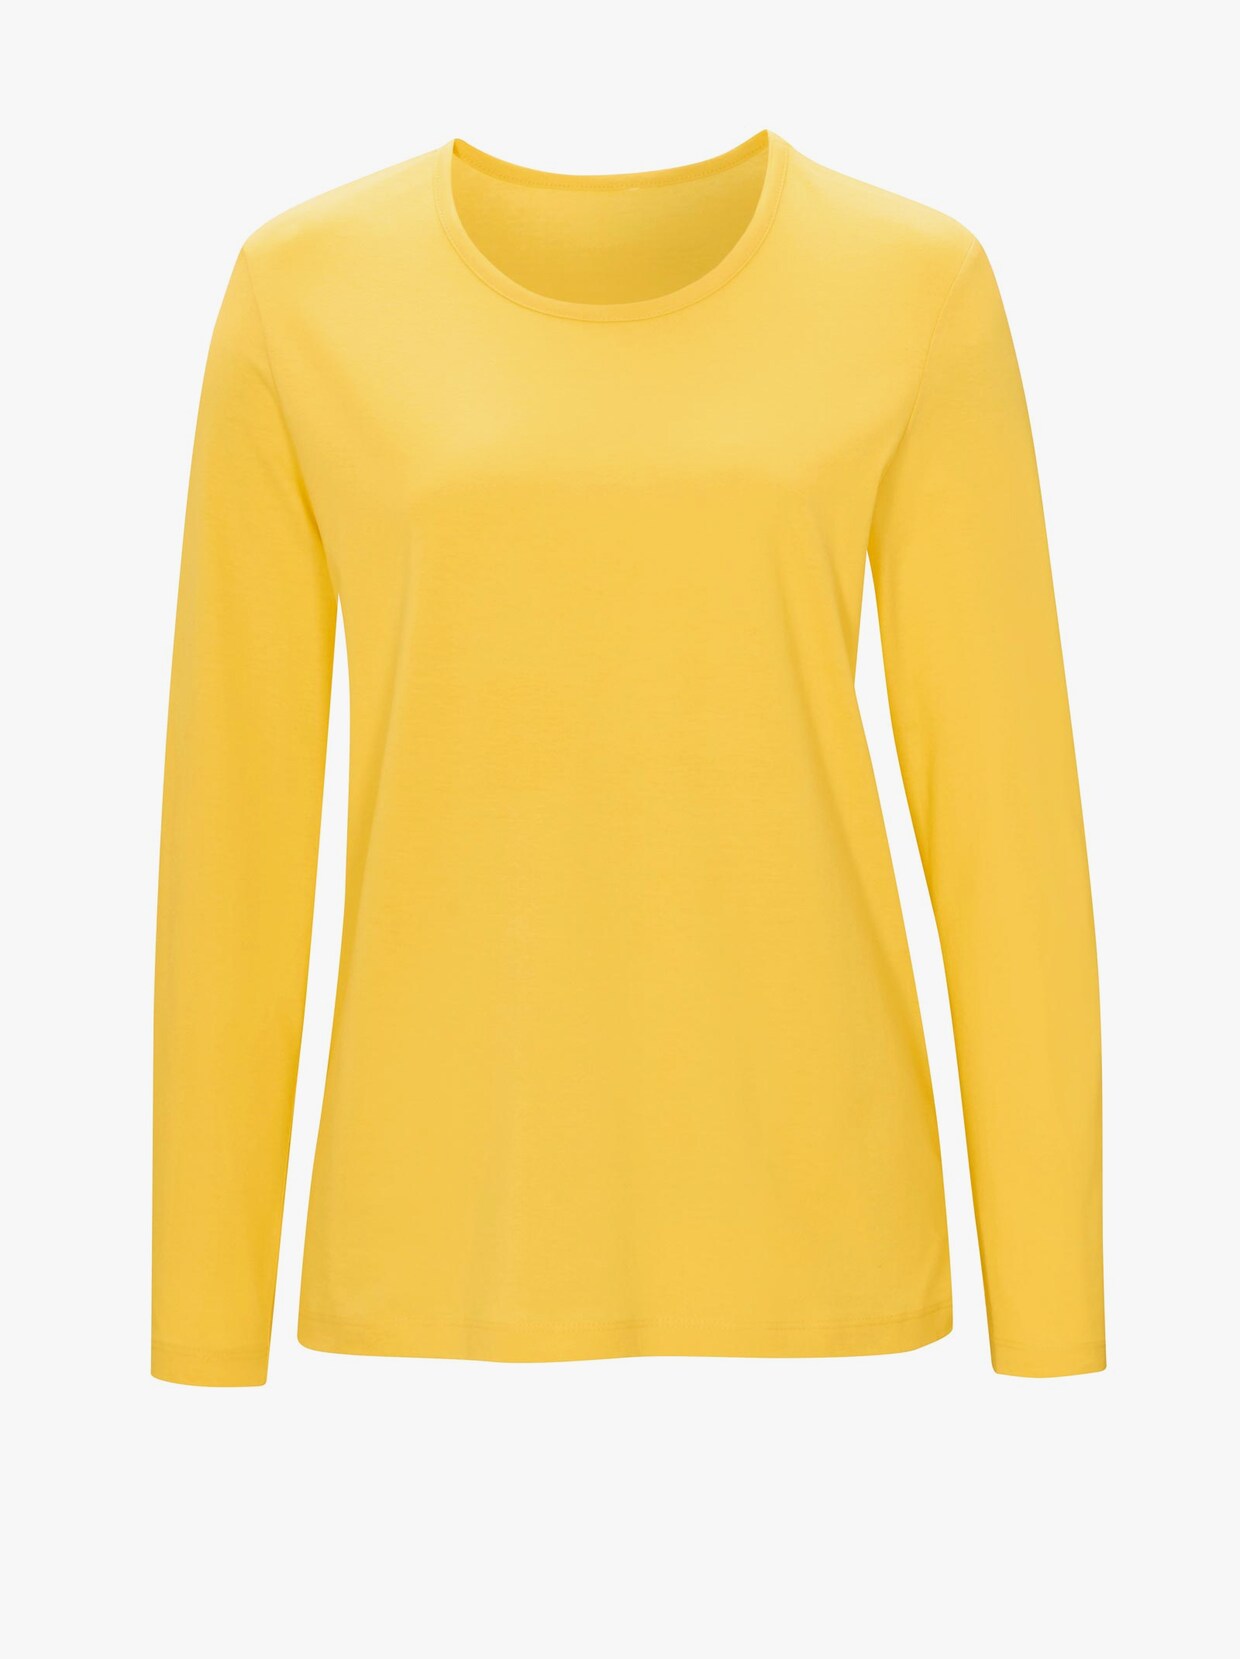 Schlafanzug-Shirt - gelb